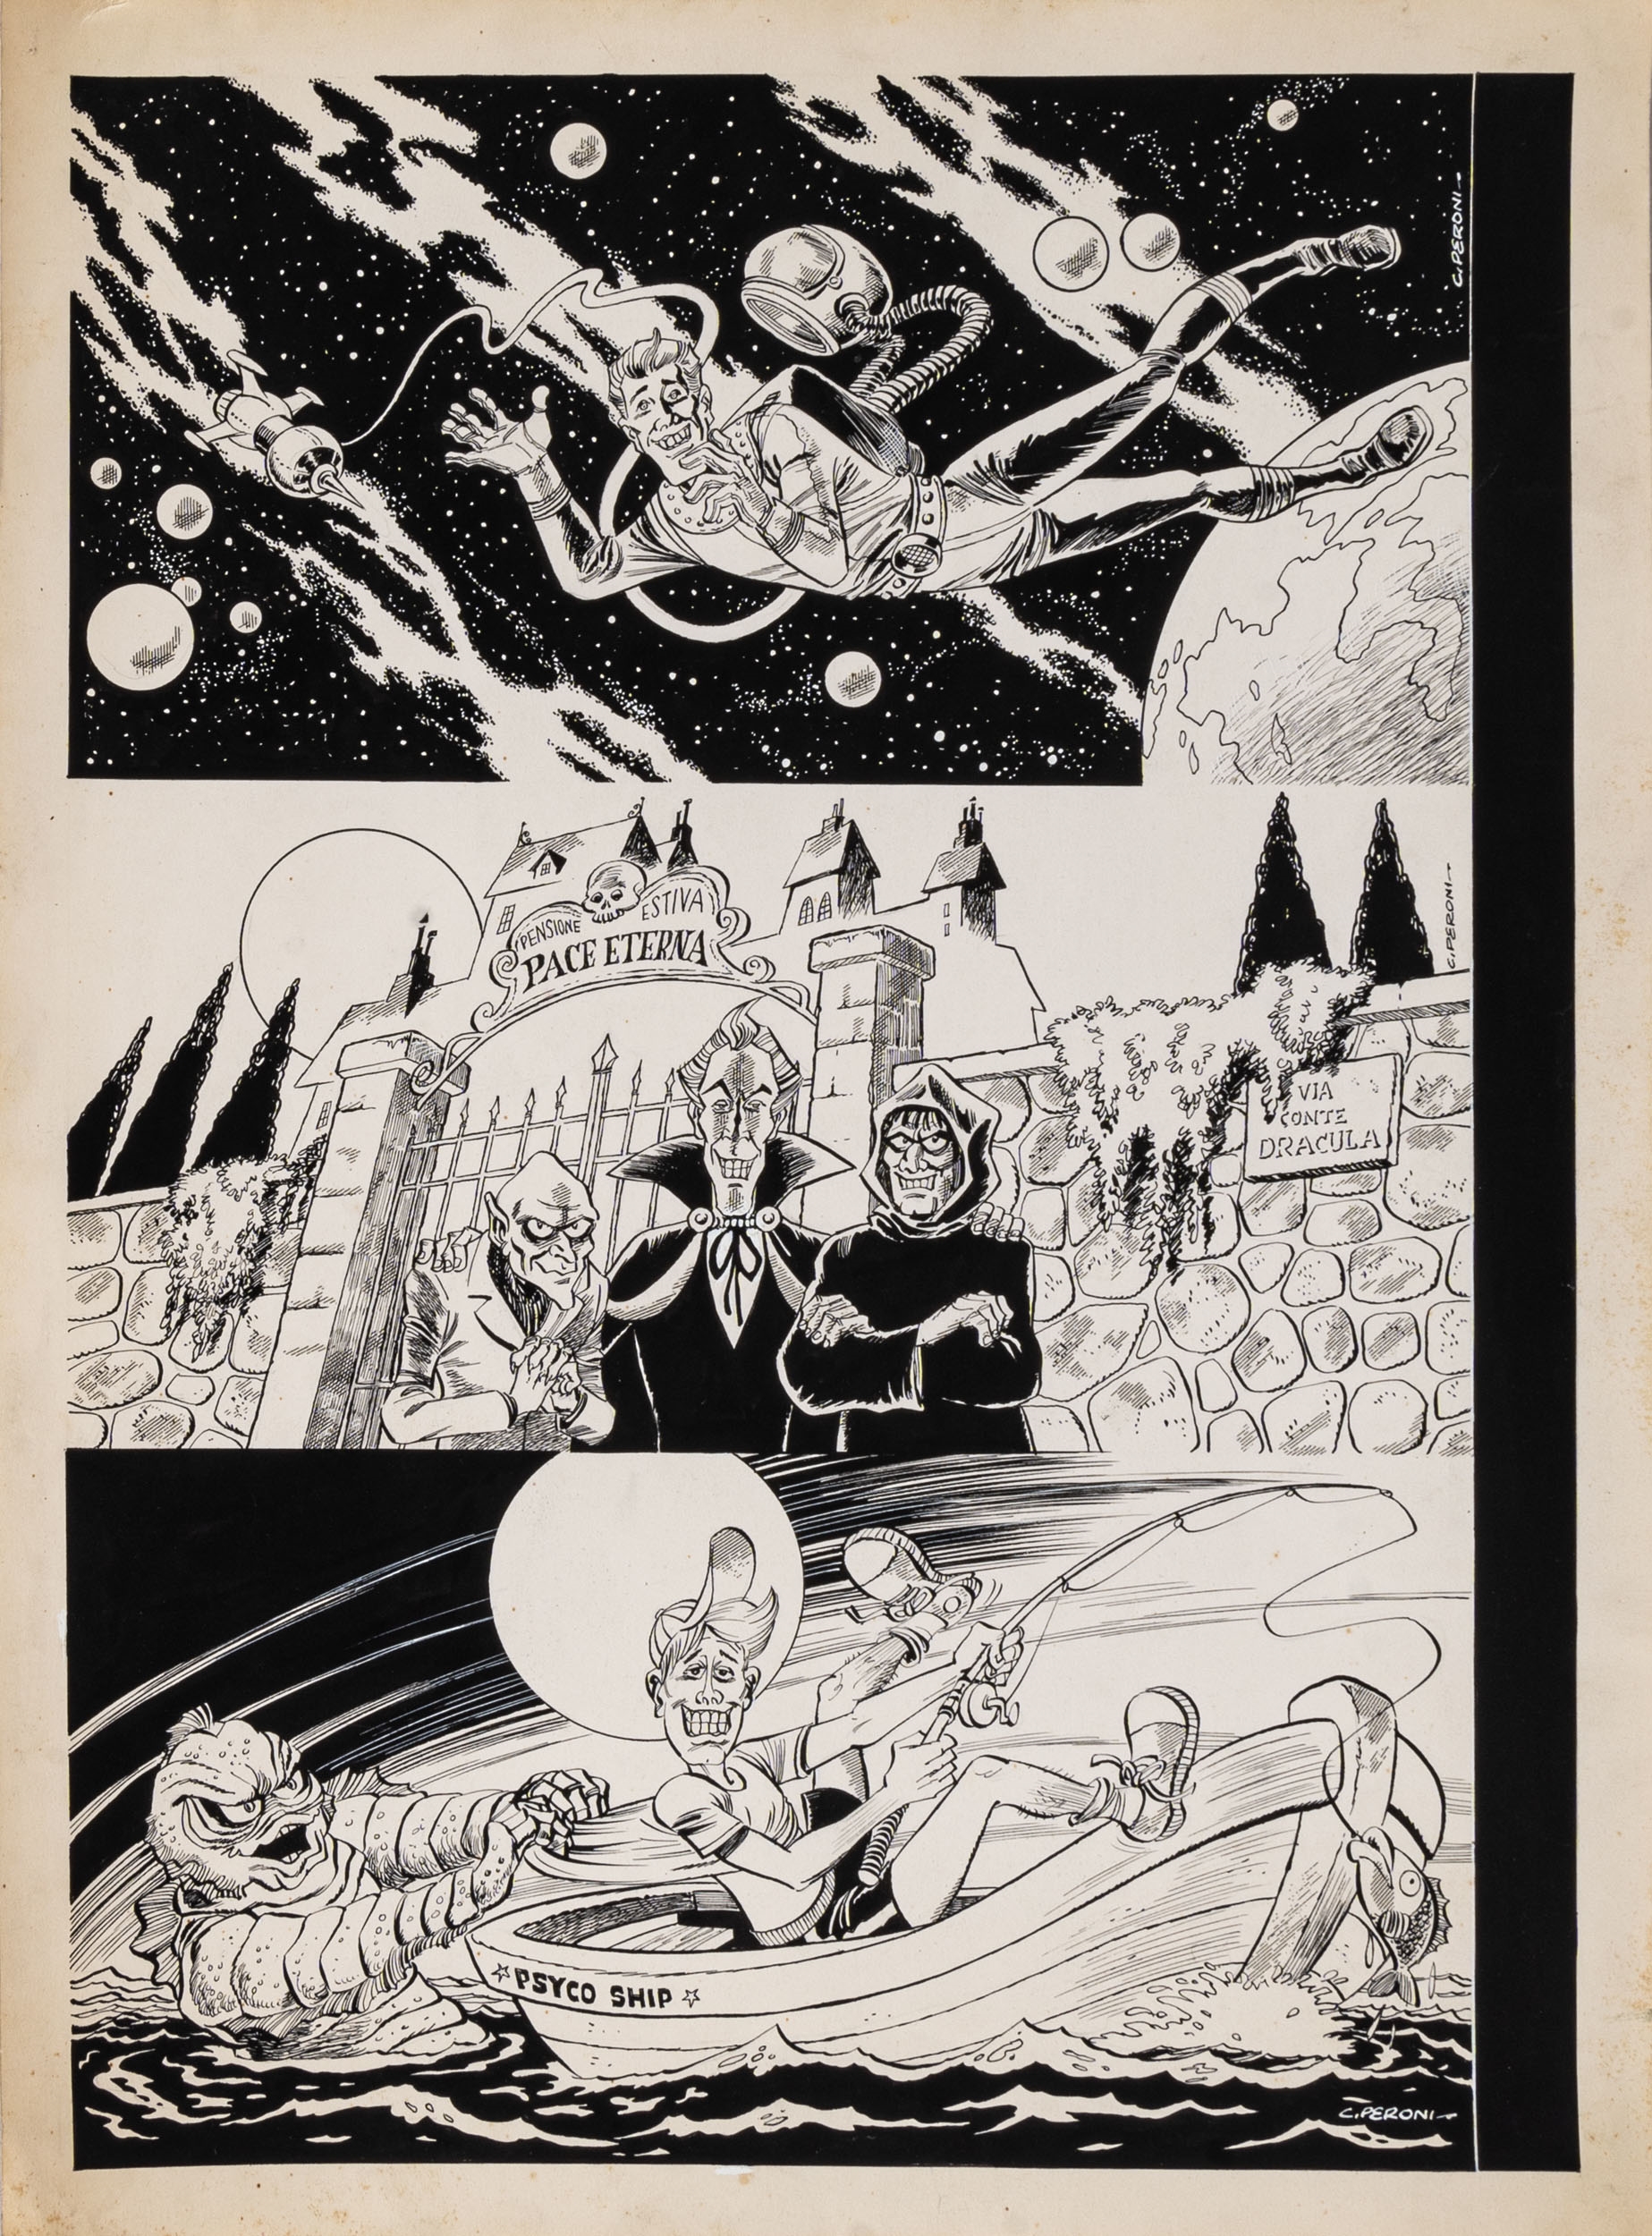 Psyco, n. 3, back cover by Carlo Peroni, 1970